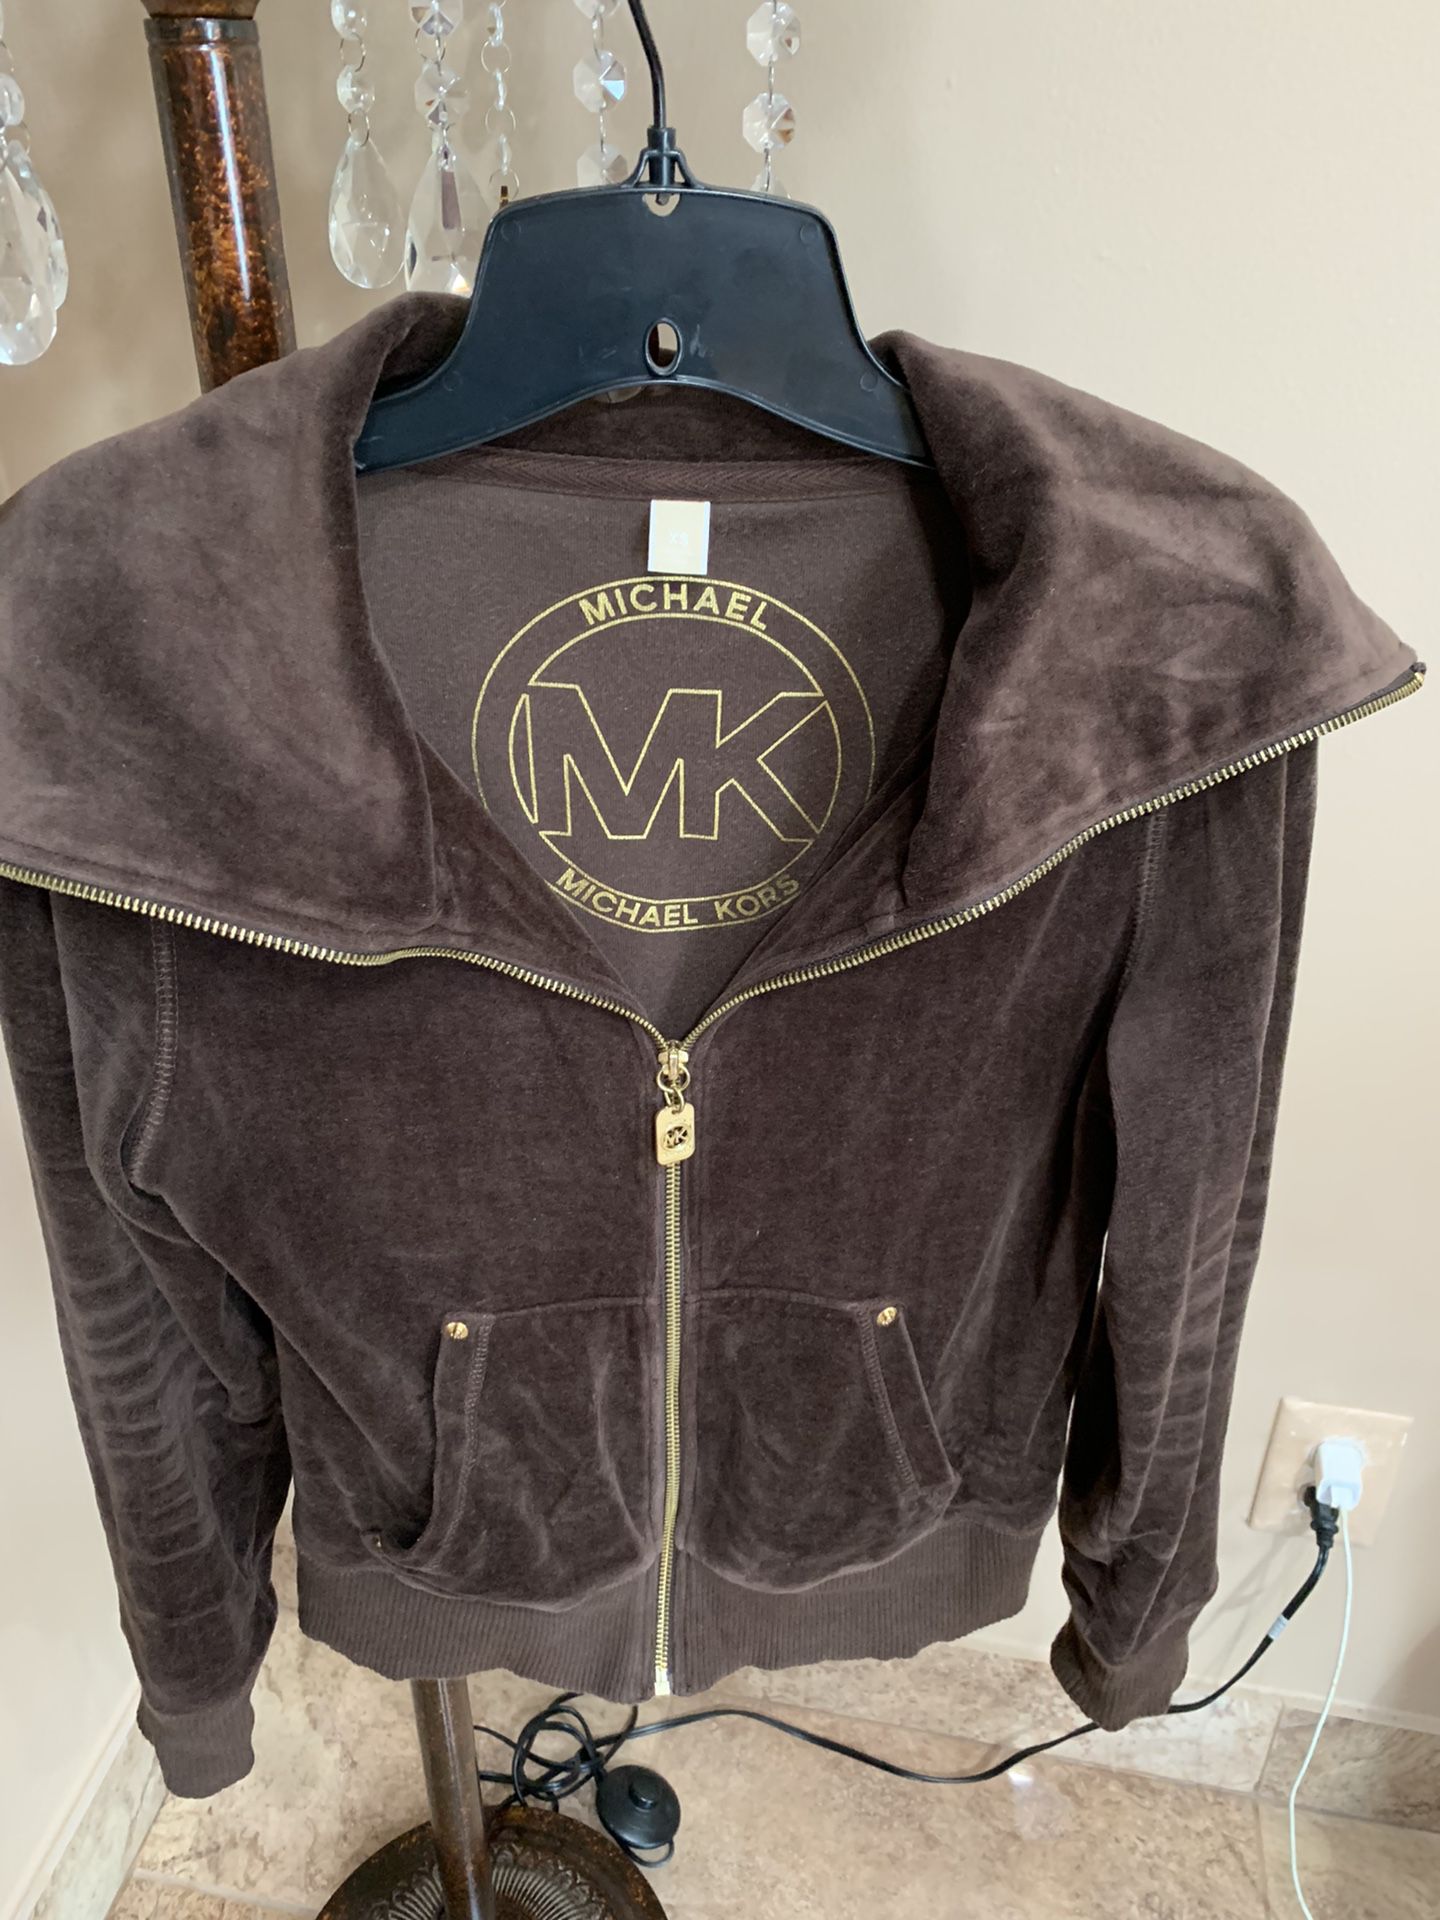 Michael Kors jackets